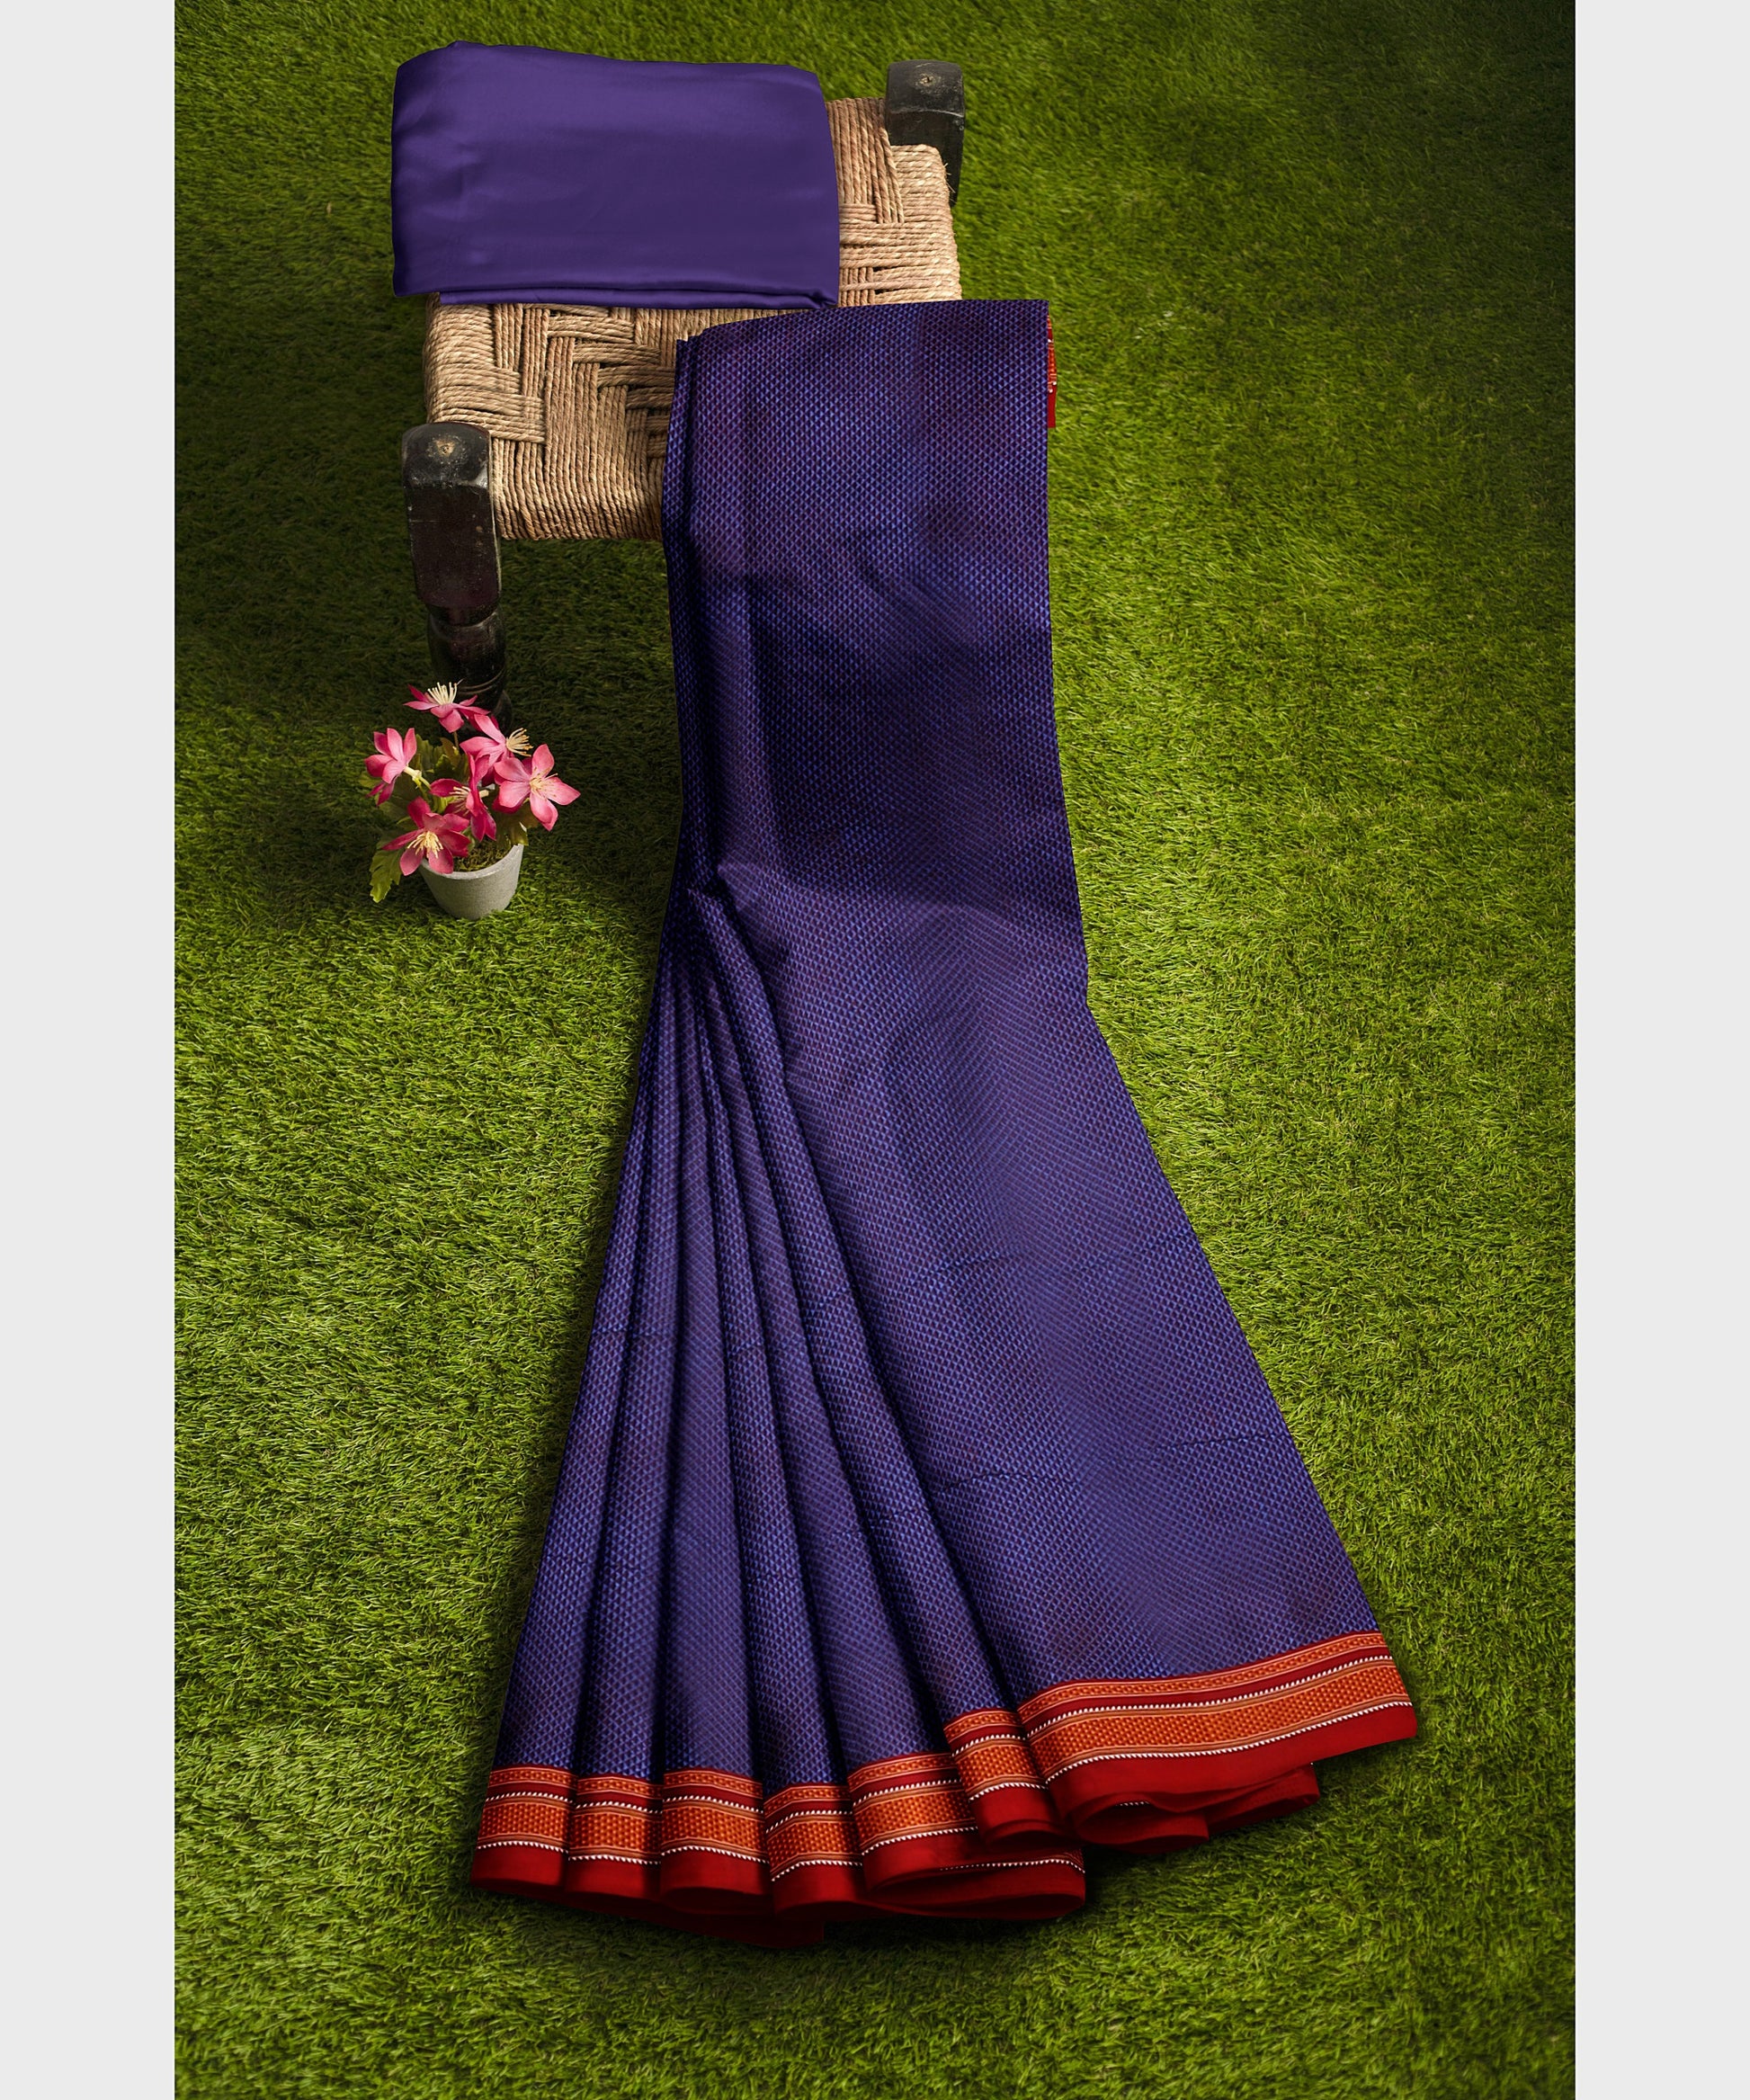 Traditional Khana Saree - Violet with Red and orange Border freeshipping - Shreni Samudaya